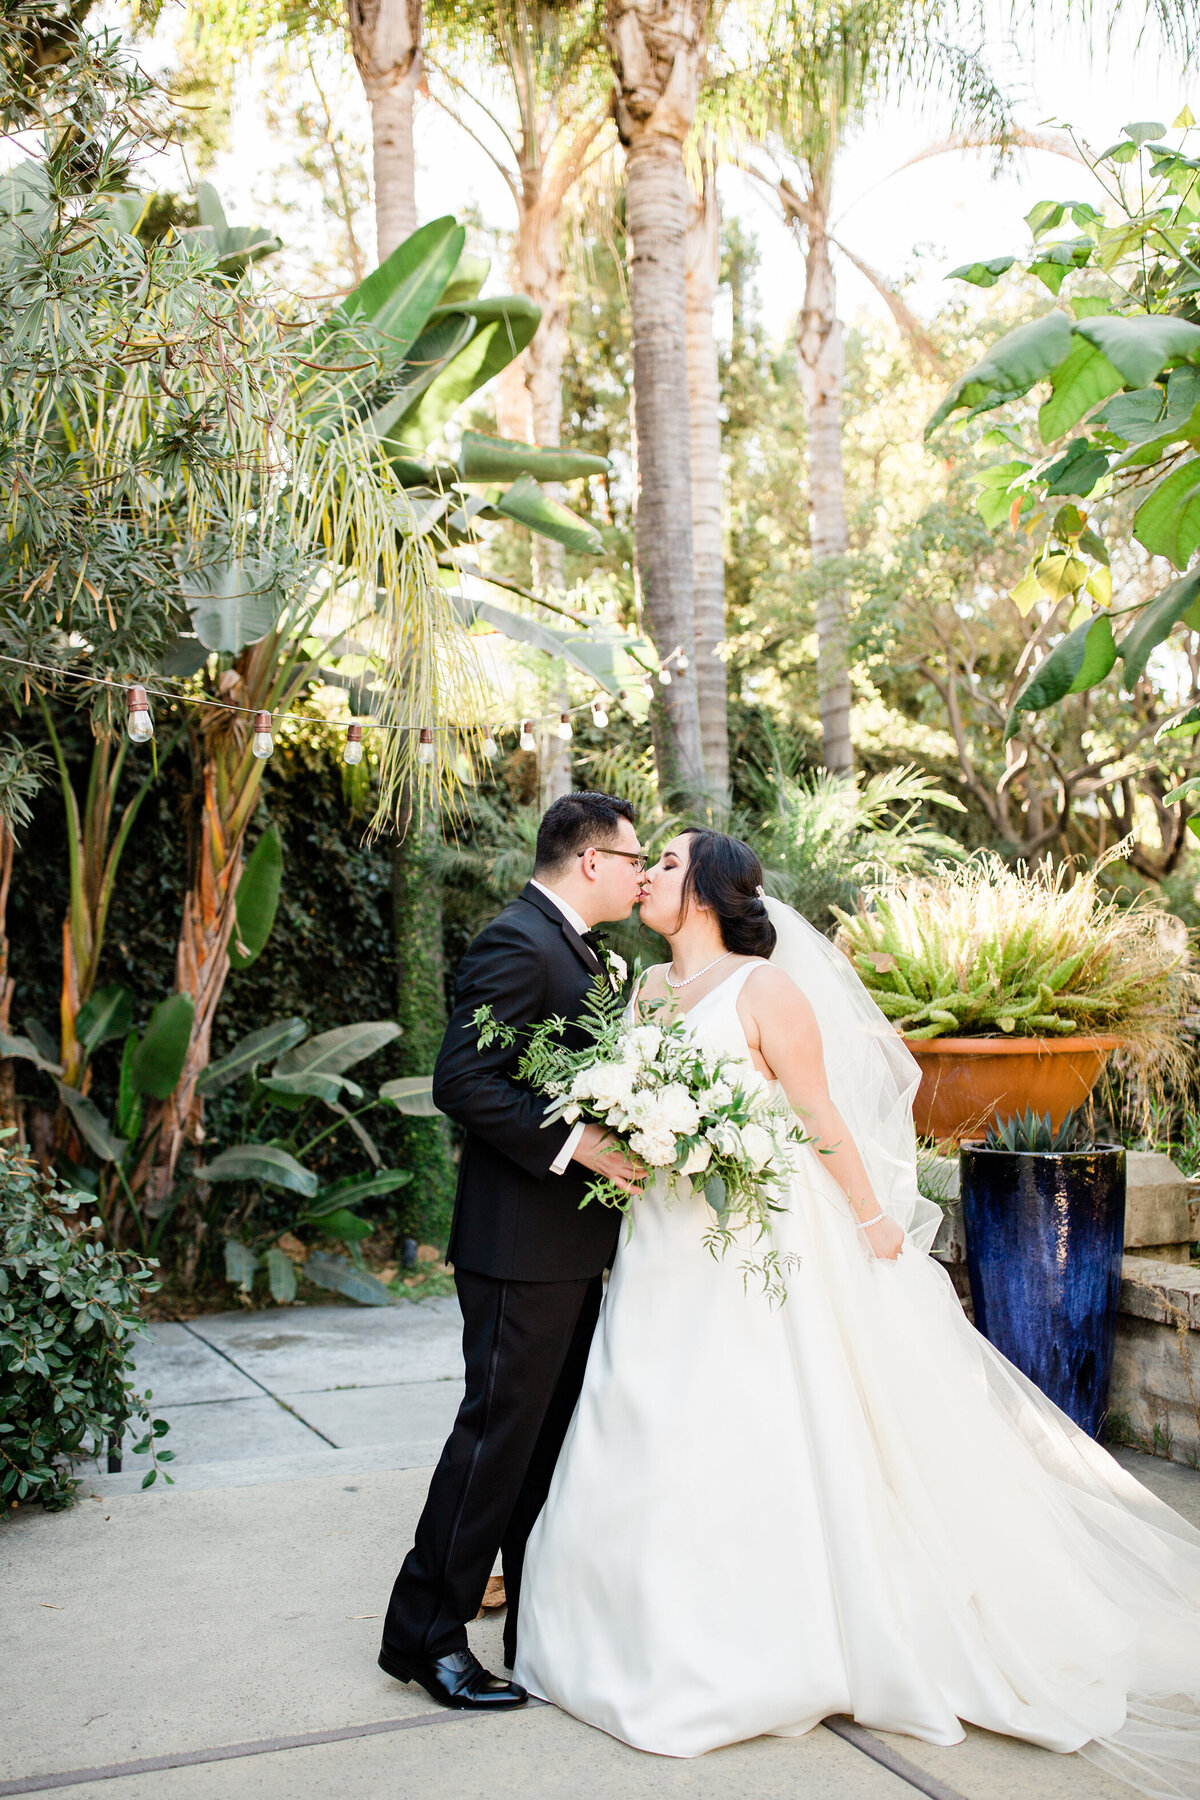 Los Angeles Wedding Planner - Robin Ballard Events - LA River Center and Garden - Alexis + Alex - 39